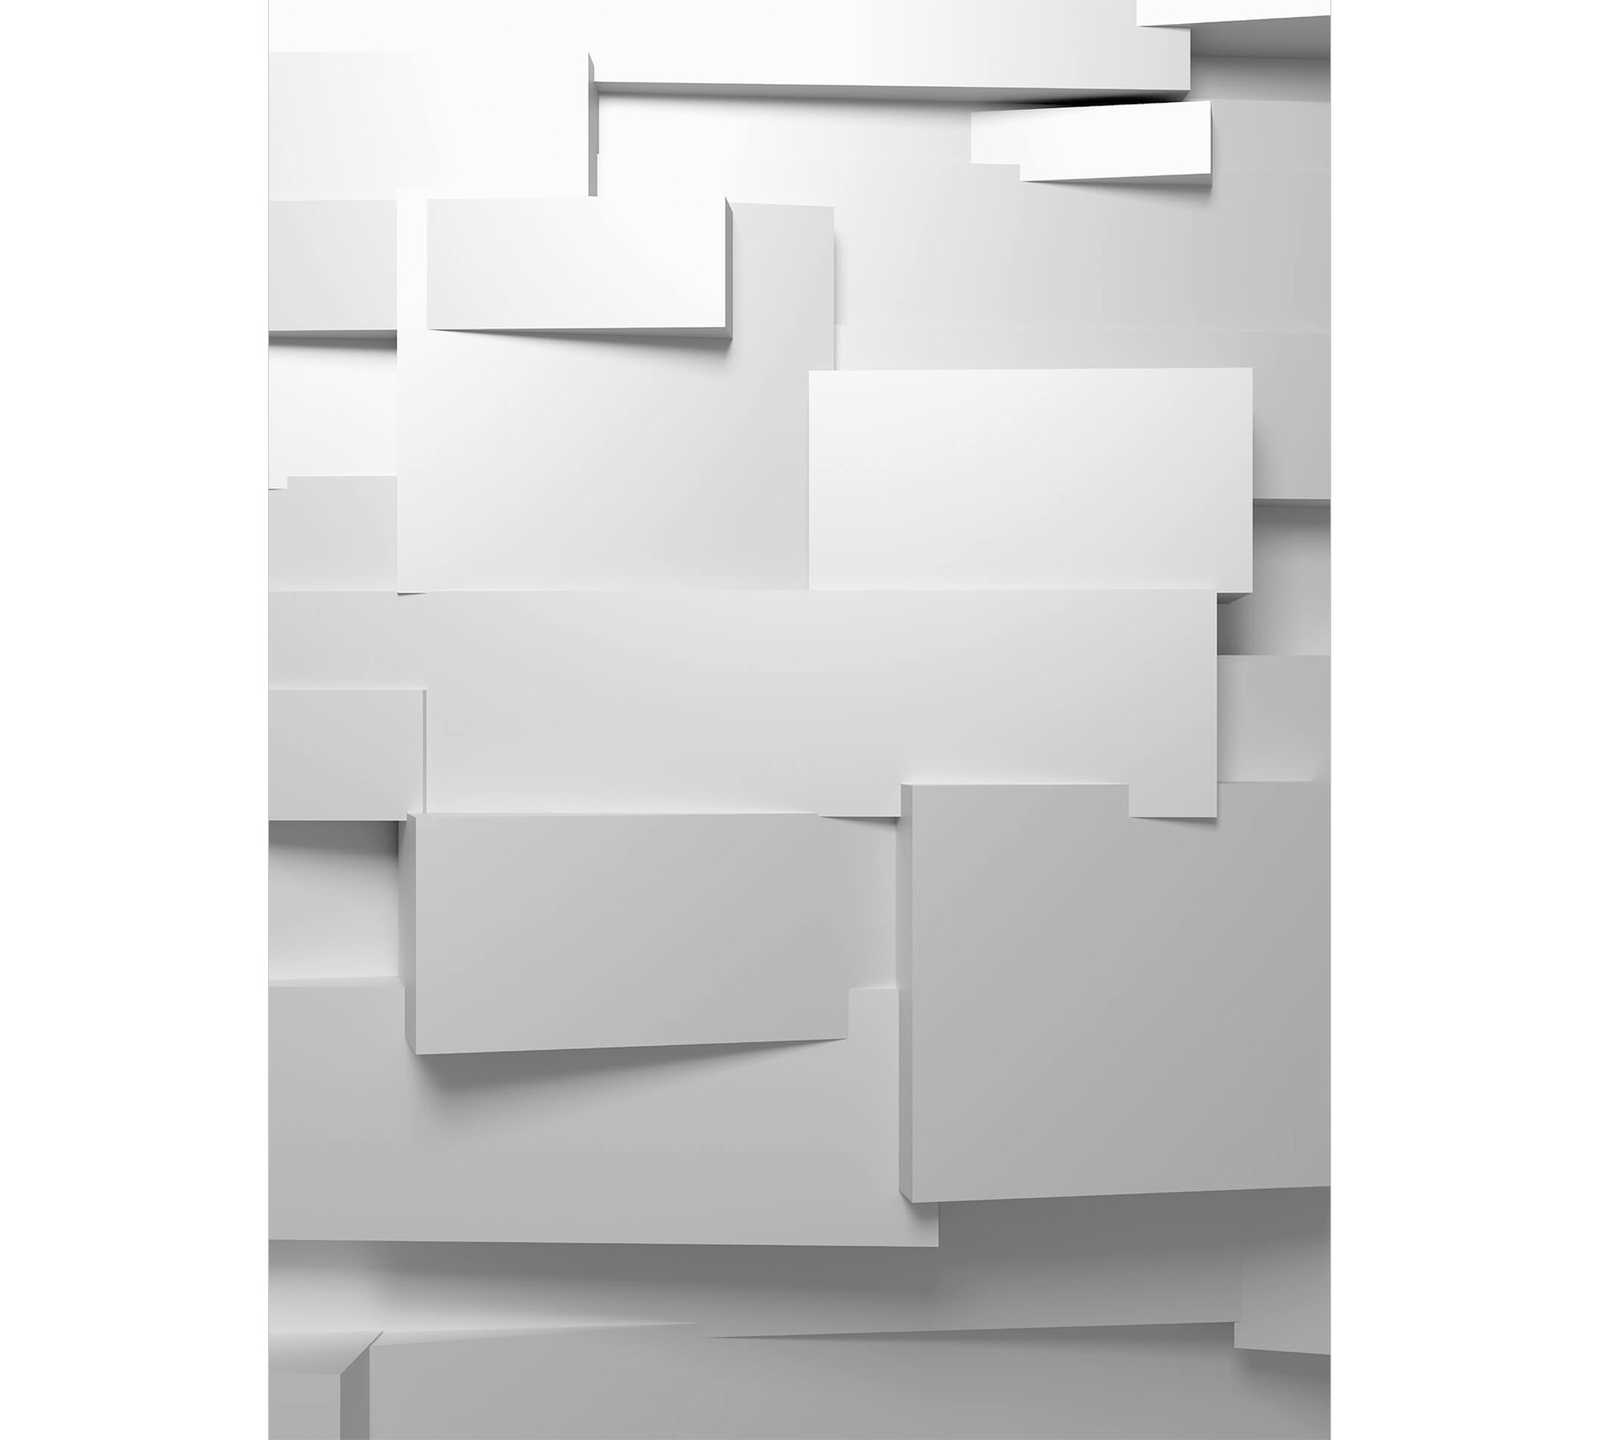 Photo wallpaper 3D Graphic effect, portrait - grey-white
